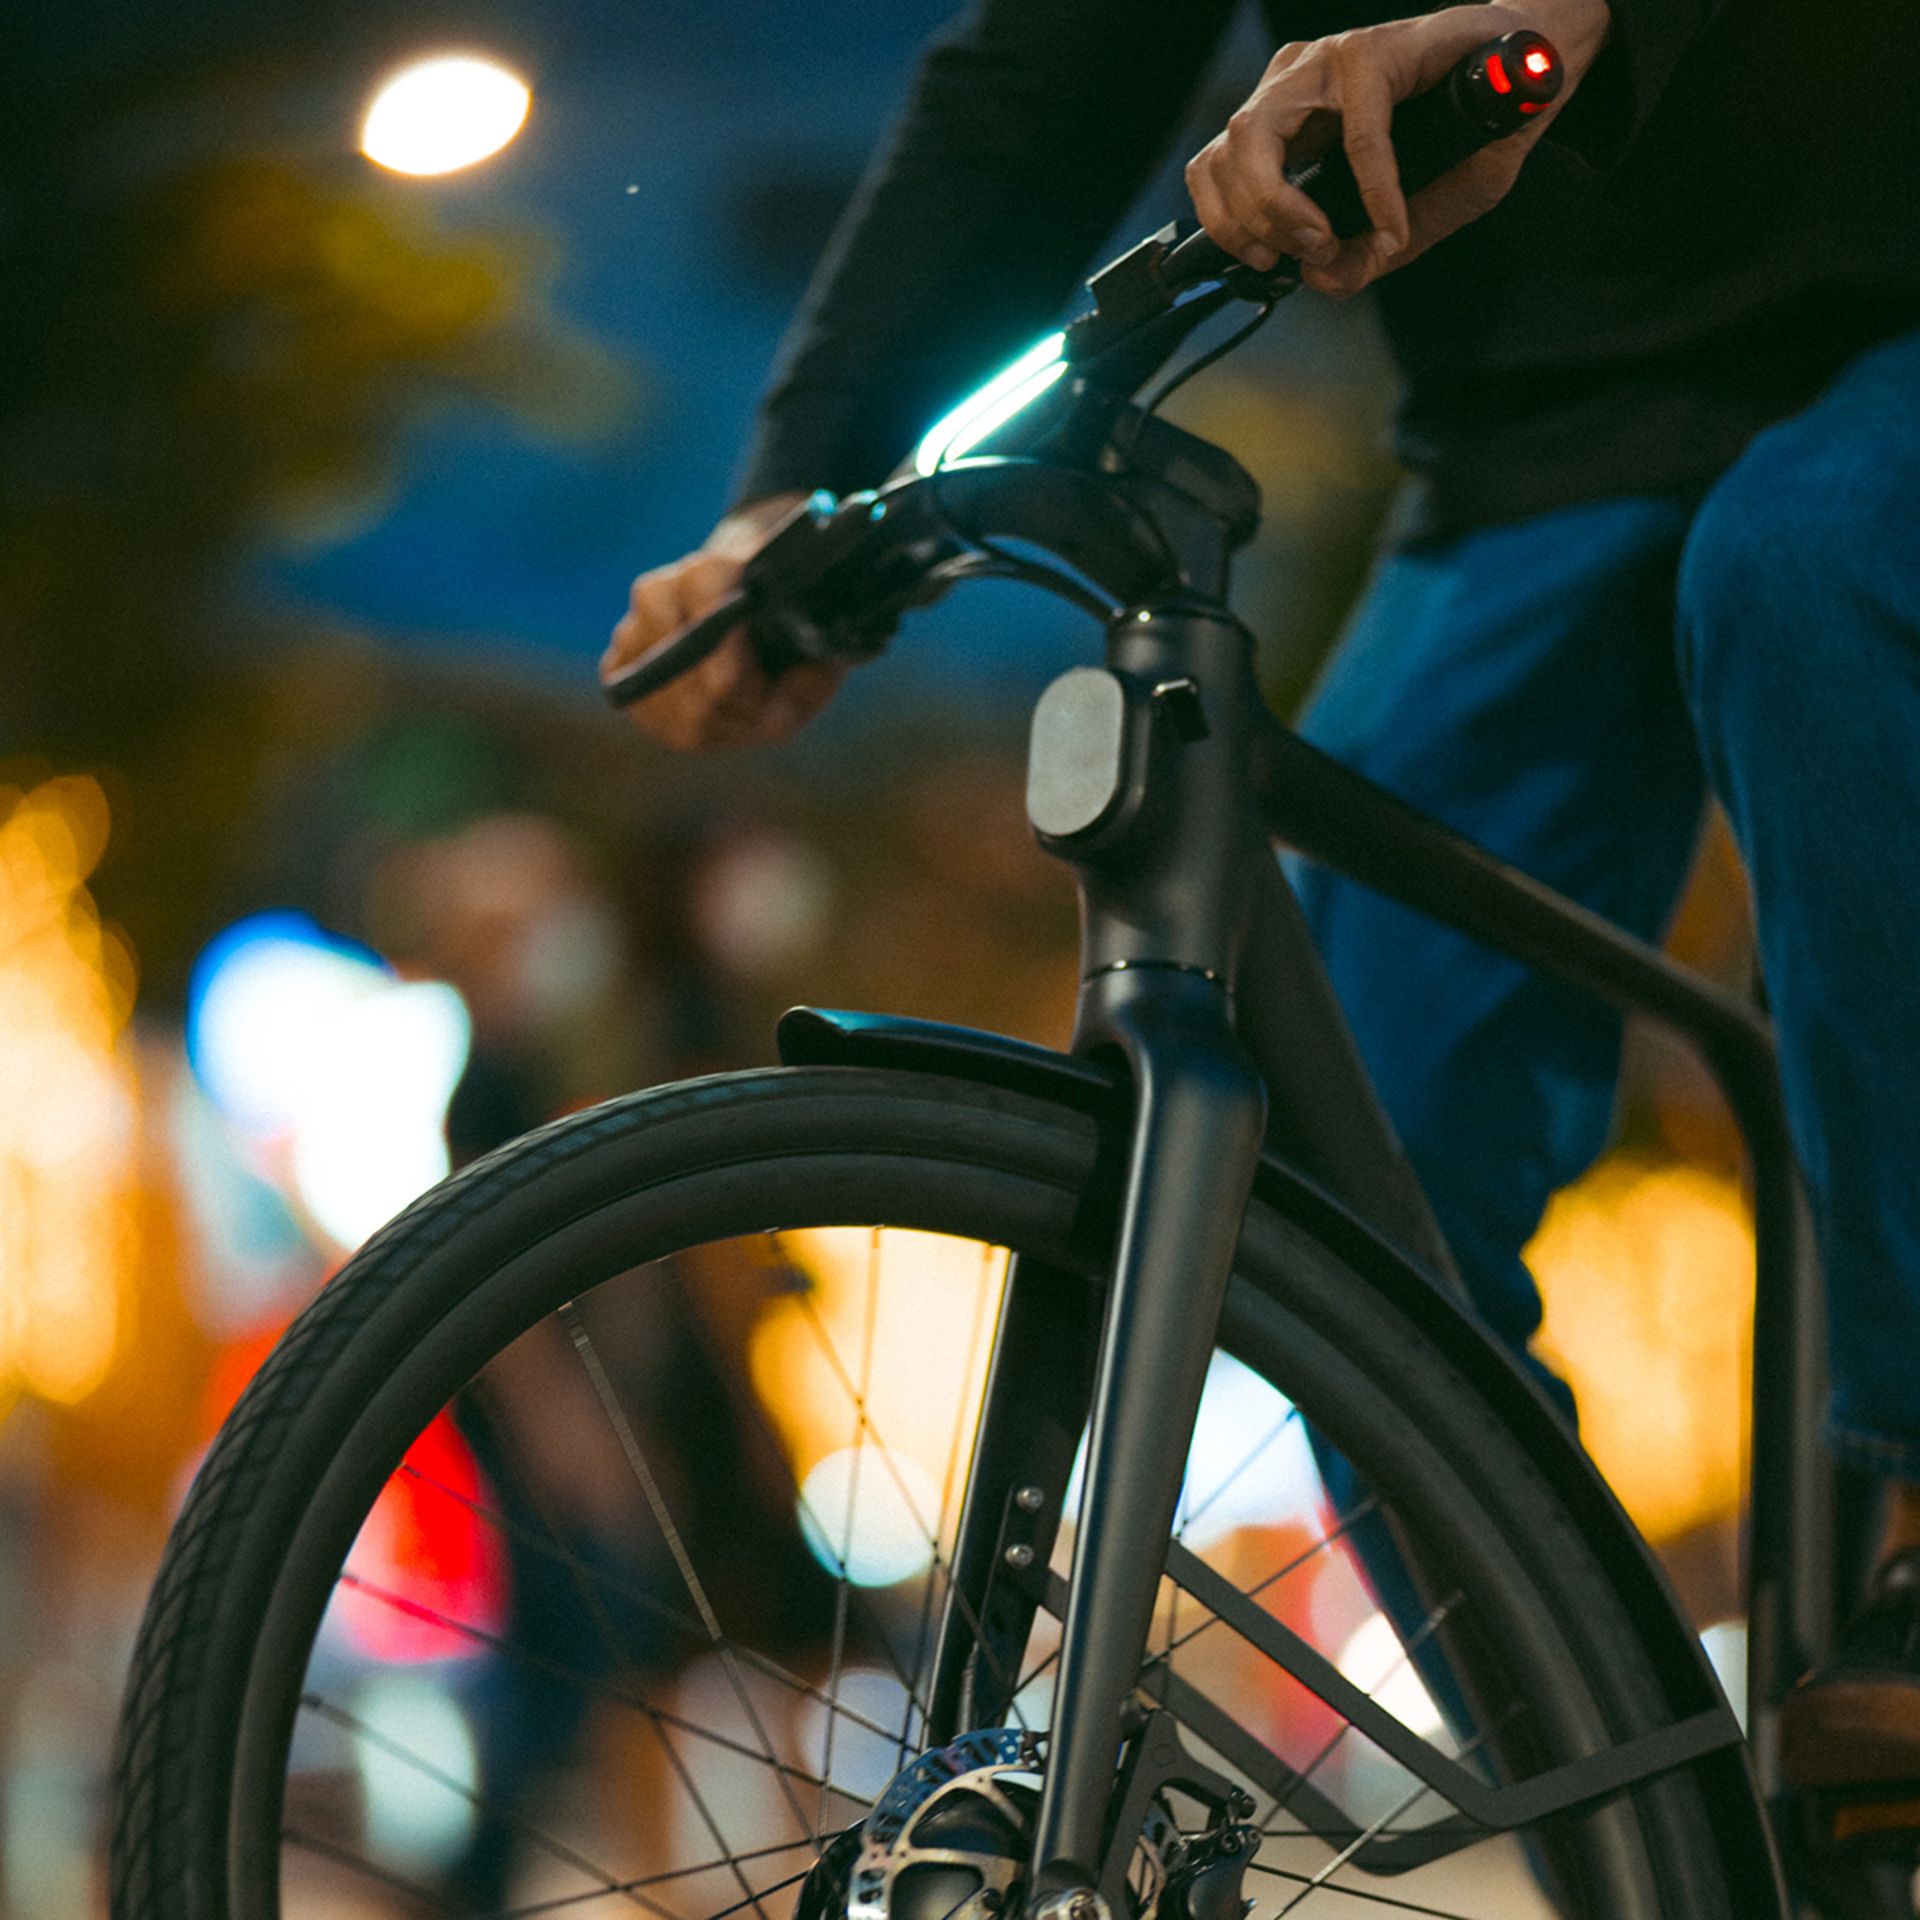 Modmo Saigon+ Electric Bicycle - RRP £2800 - Size L (Rider 175-190cm) - Image 17 of 19